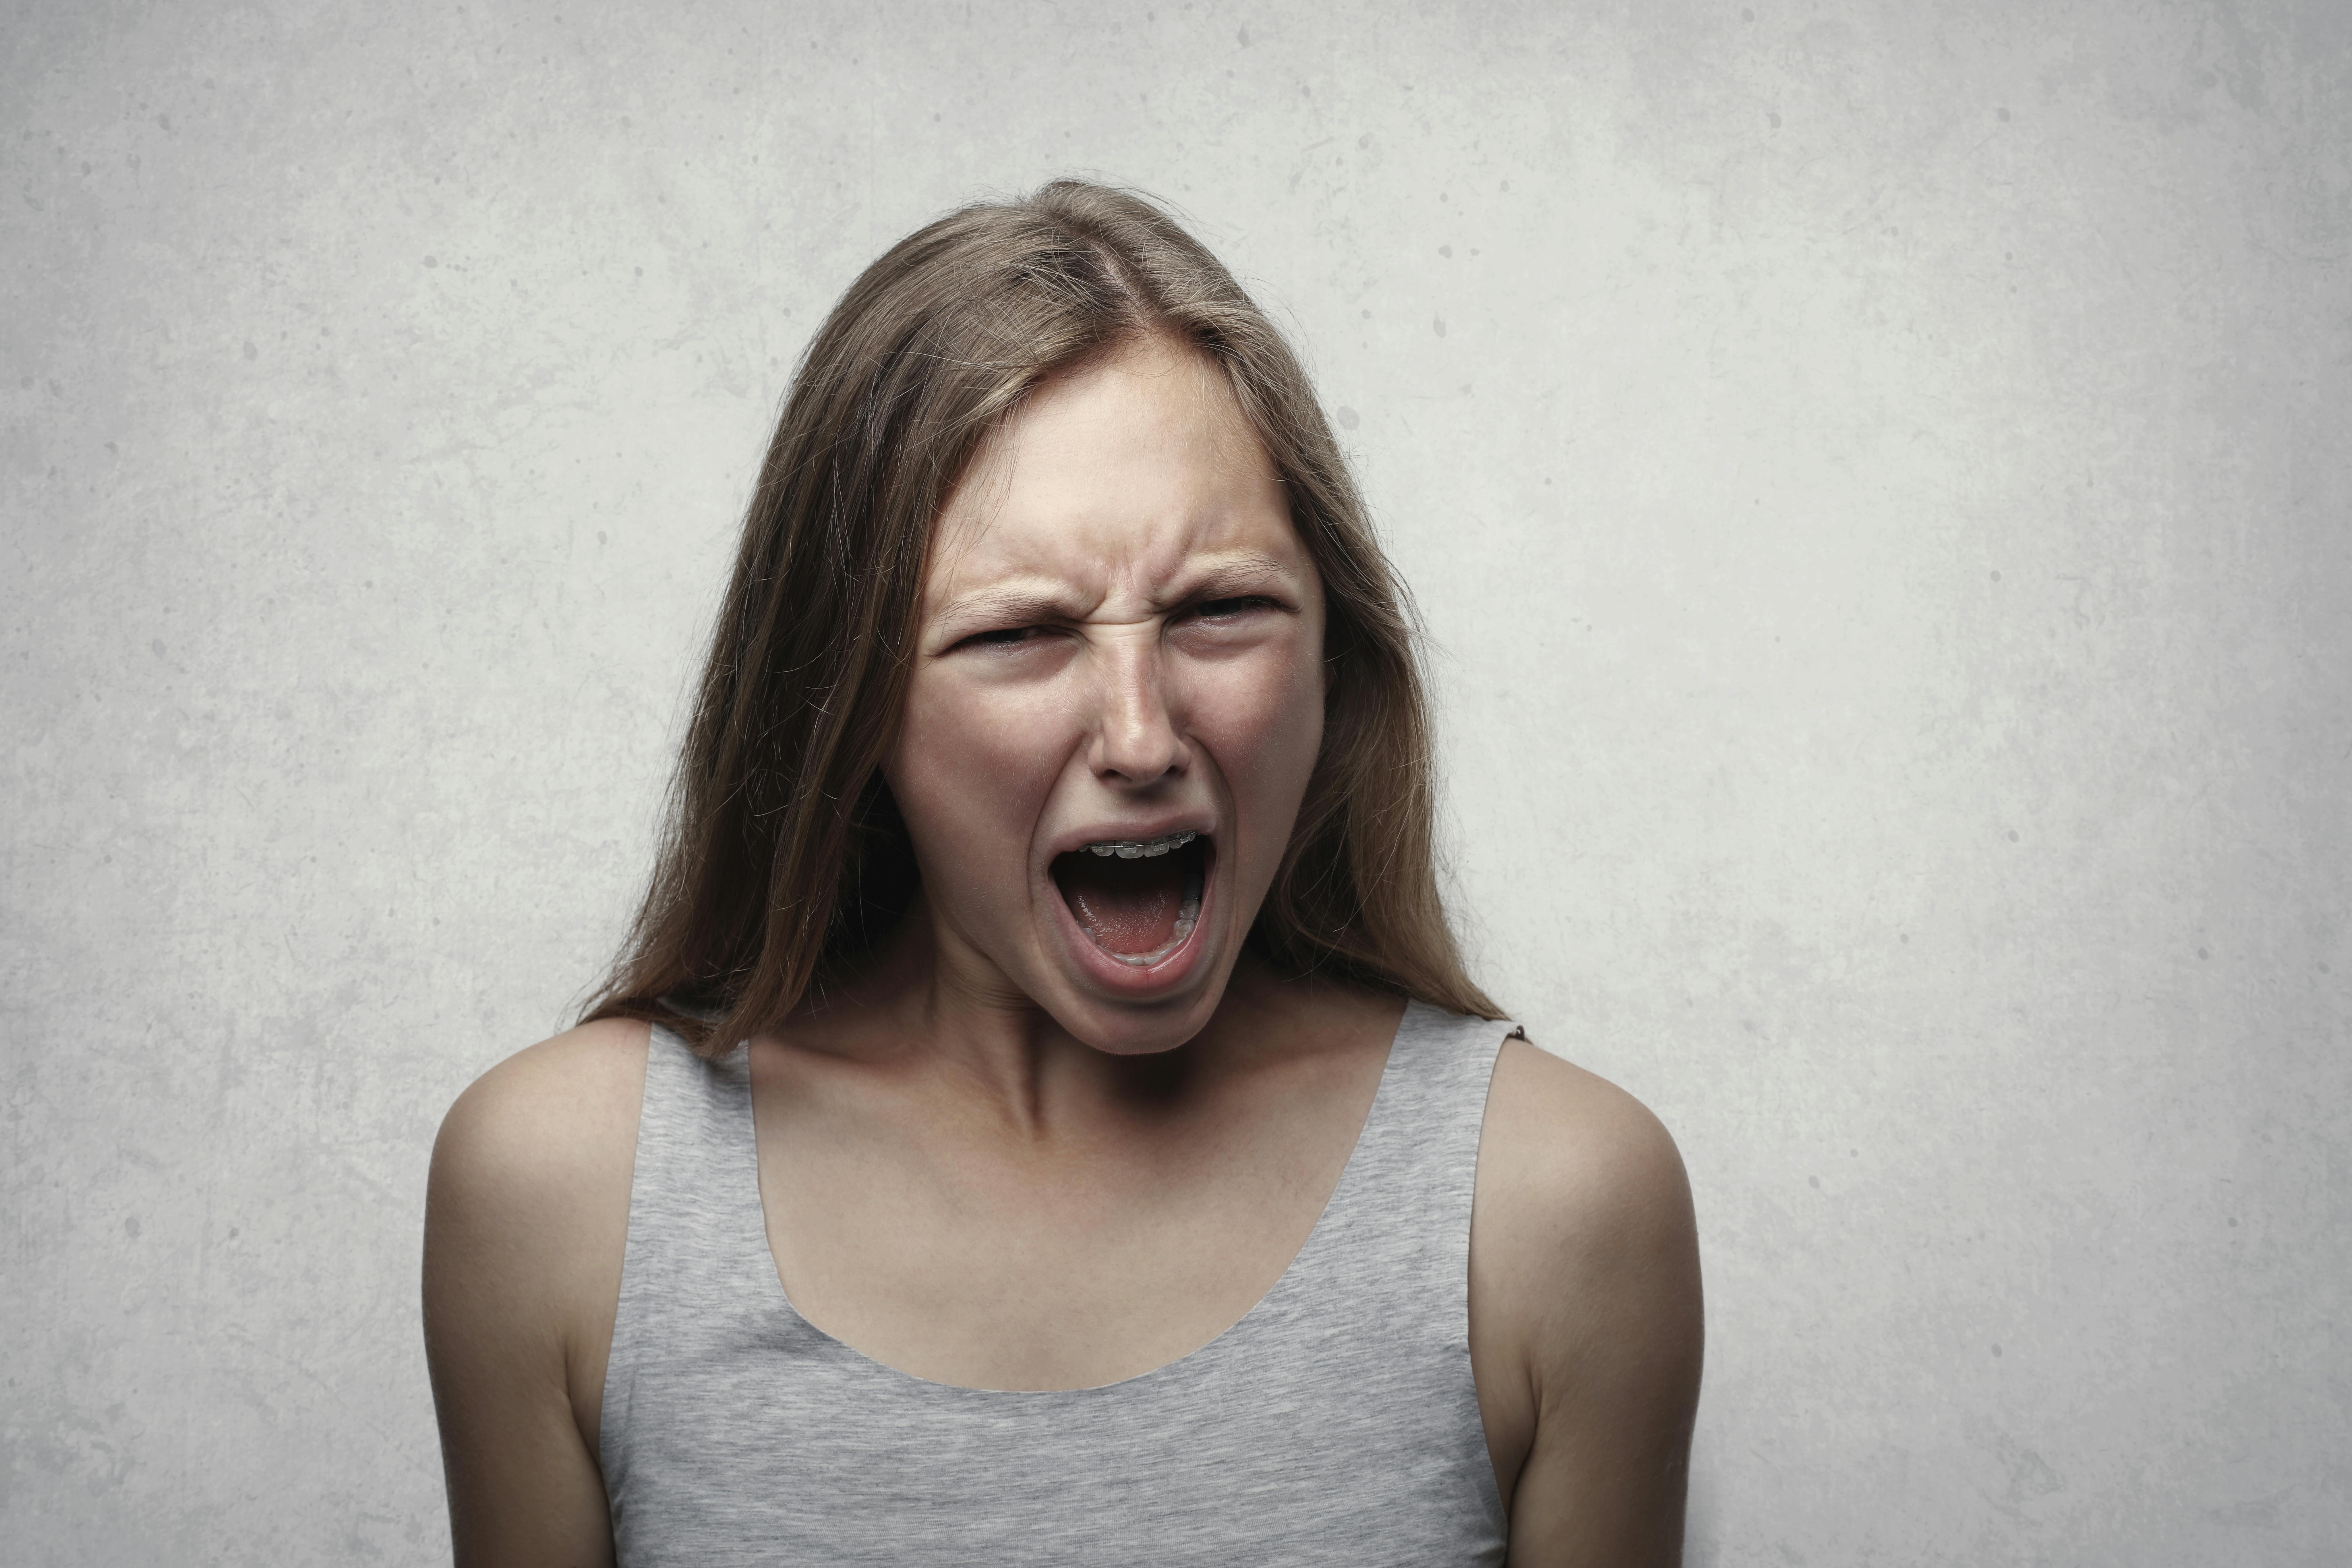 A woman screaming | Source: Pexels